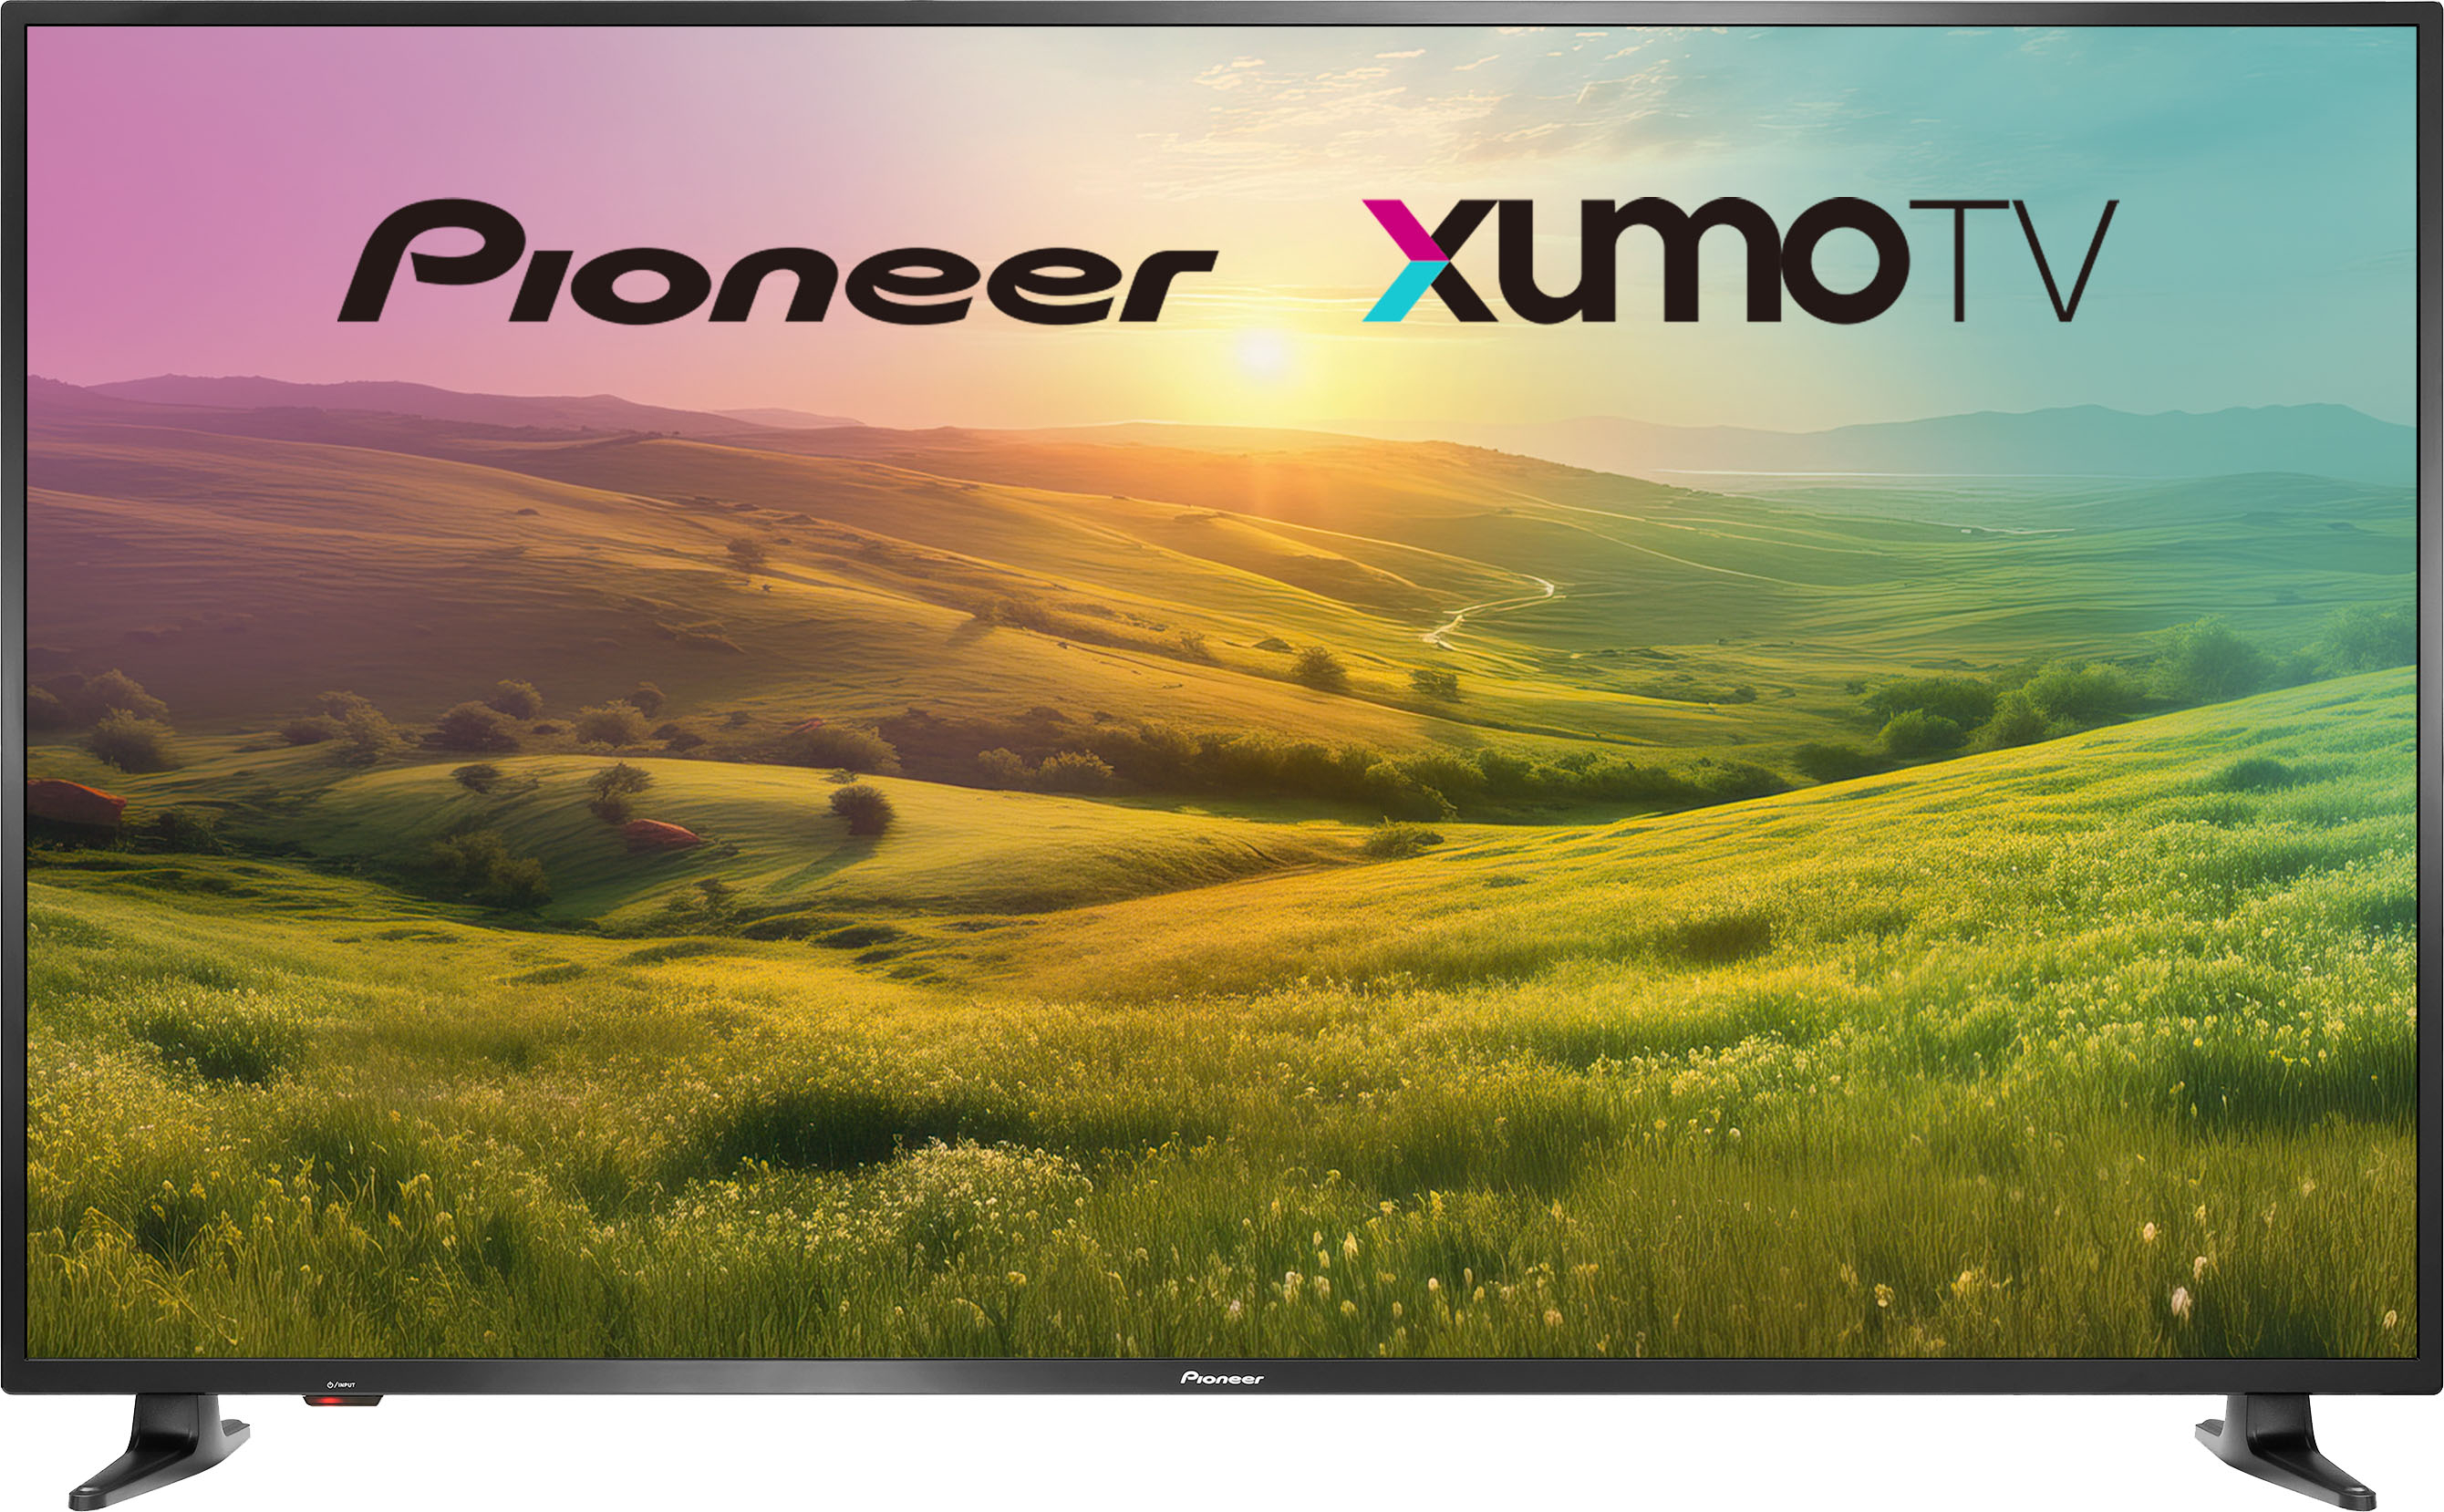 Pioneer 65 Class LED 4K UHD Smart Xumo TV PN65-751-24U - Best Buy